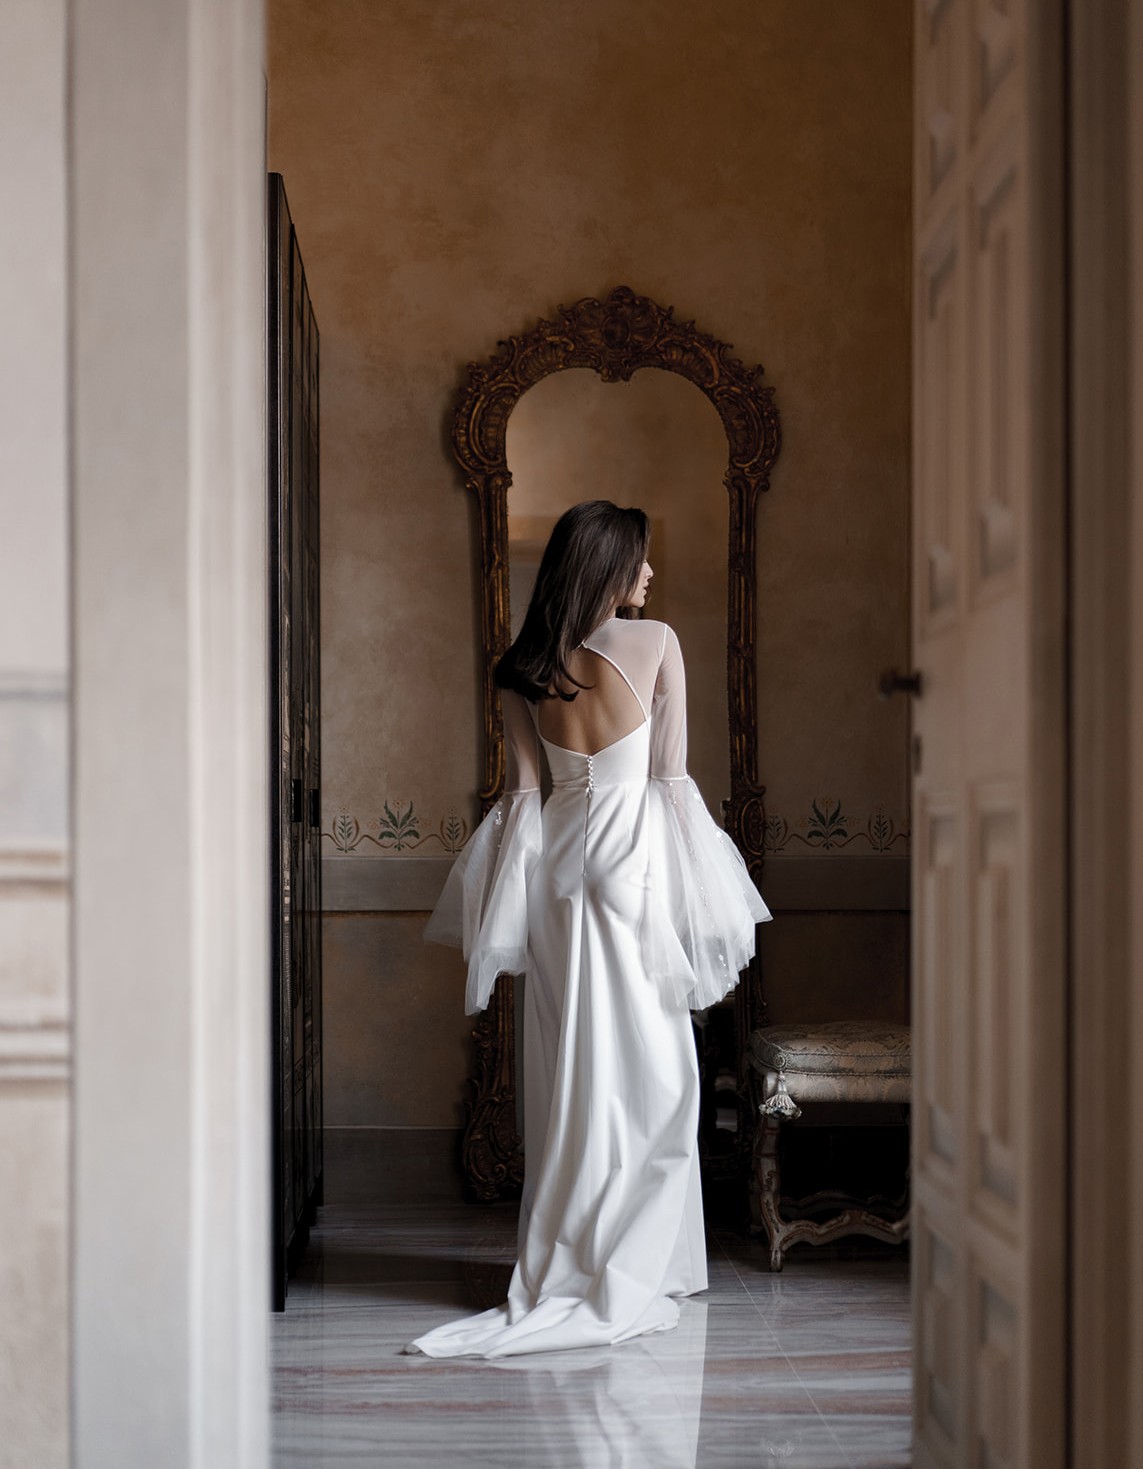 Villa Balbiano Lake Como luxury property private exclusive rentals destination weddings events fashion shoots master suite bathroom portrait